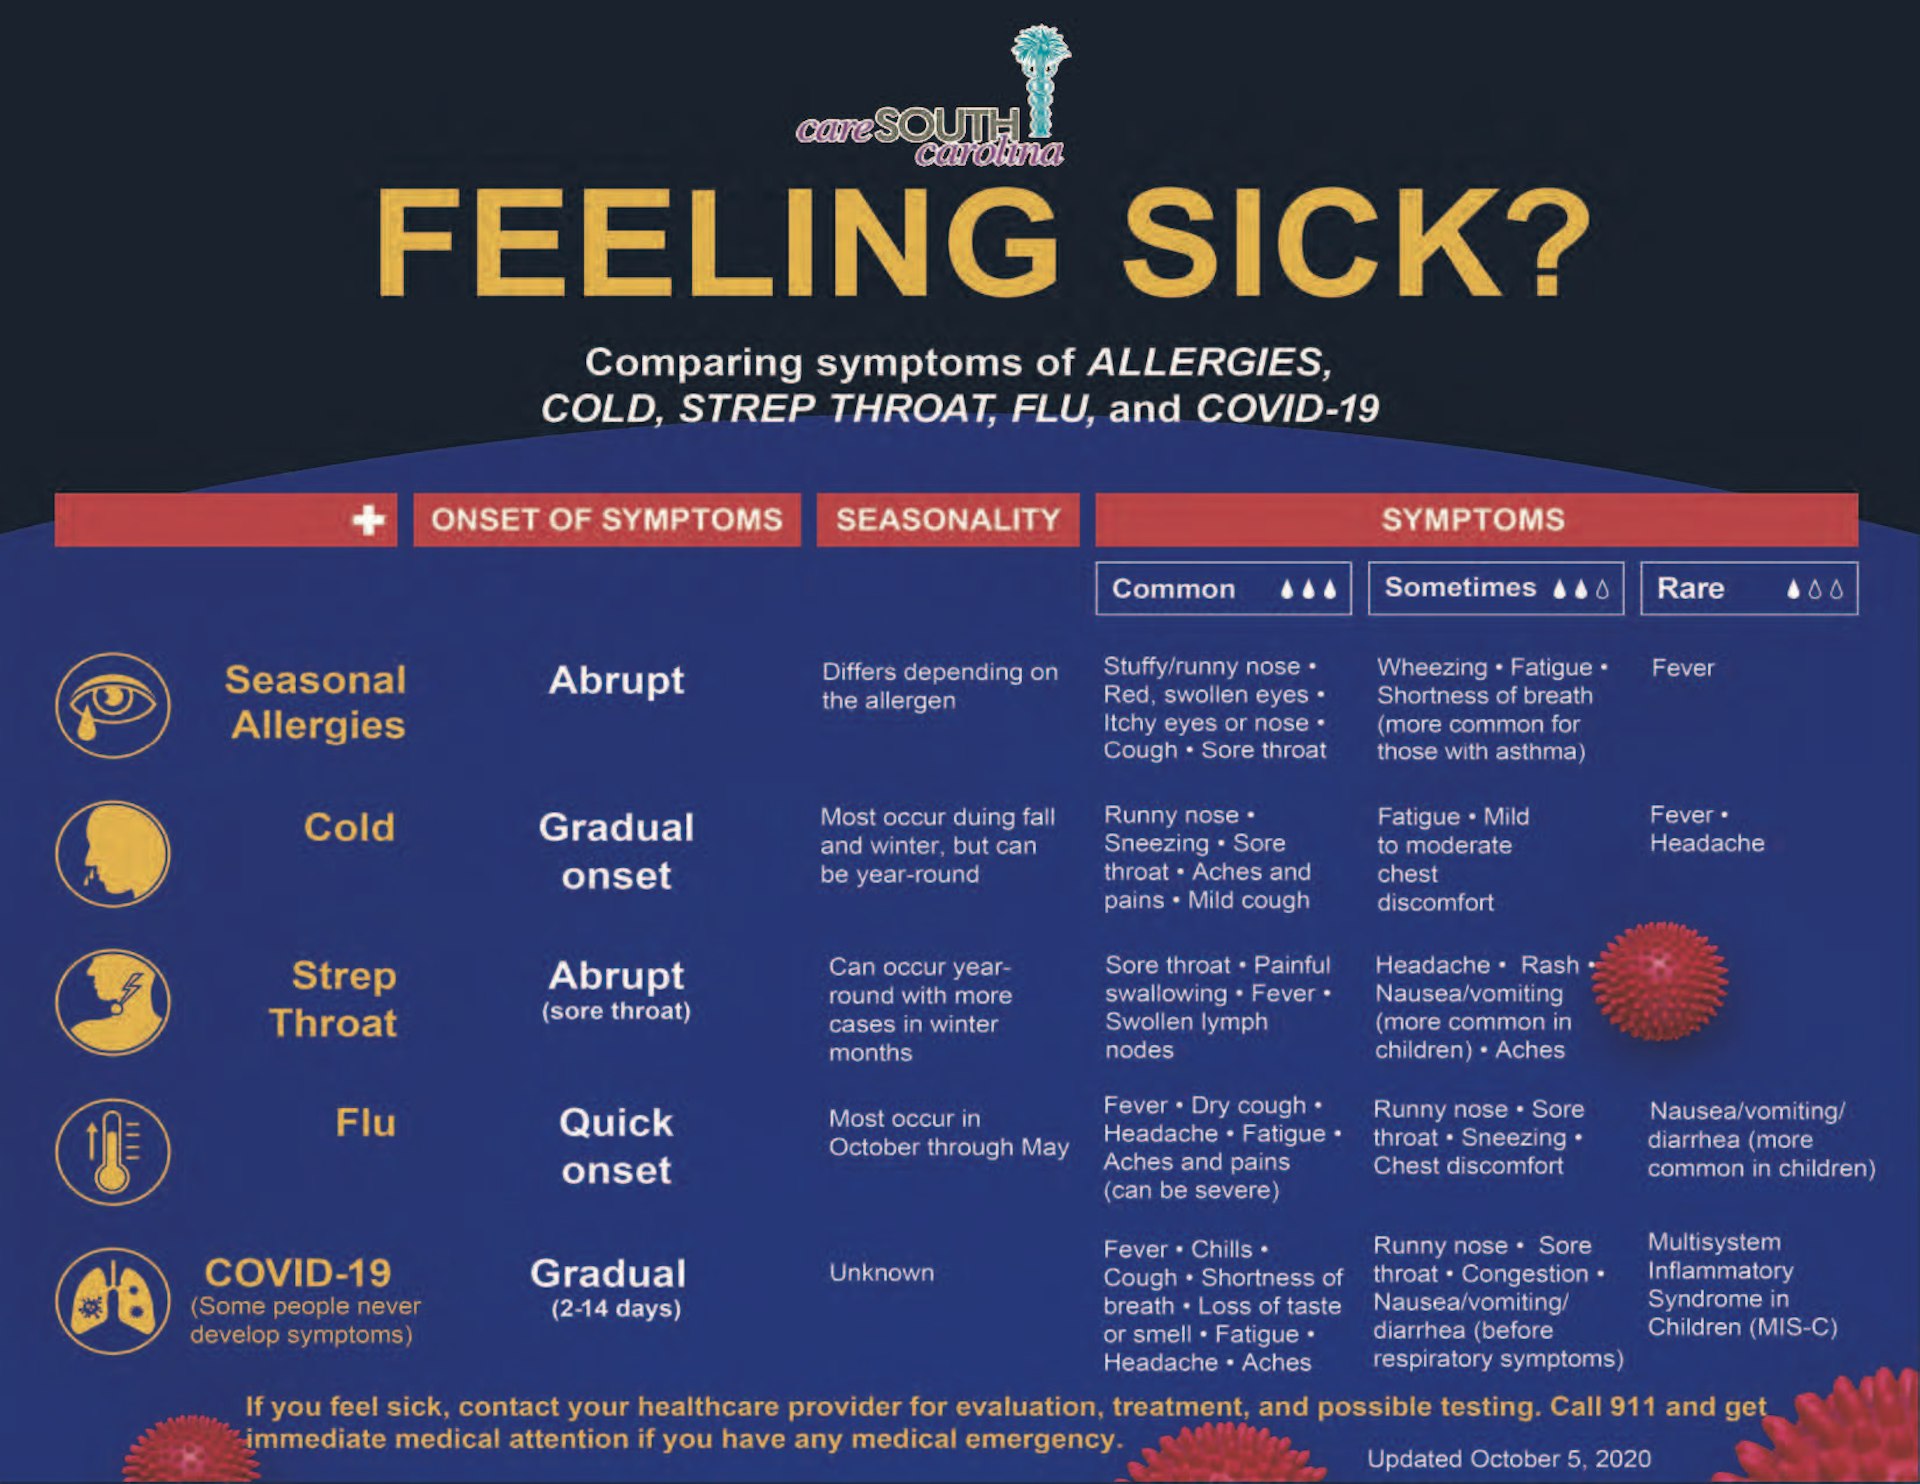 Feeling Sick? Comparing symptoms of Cold, Strep, Flu & COVID19